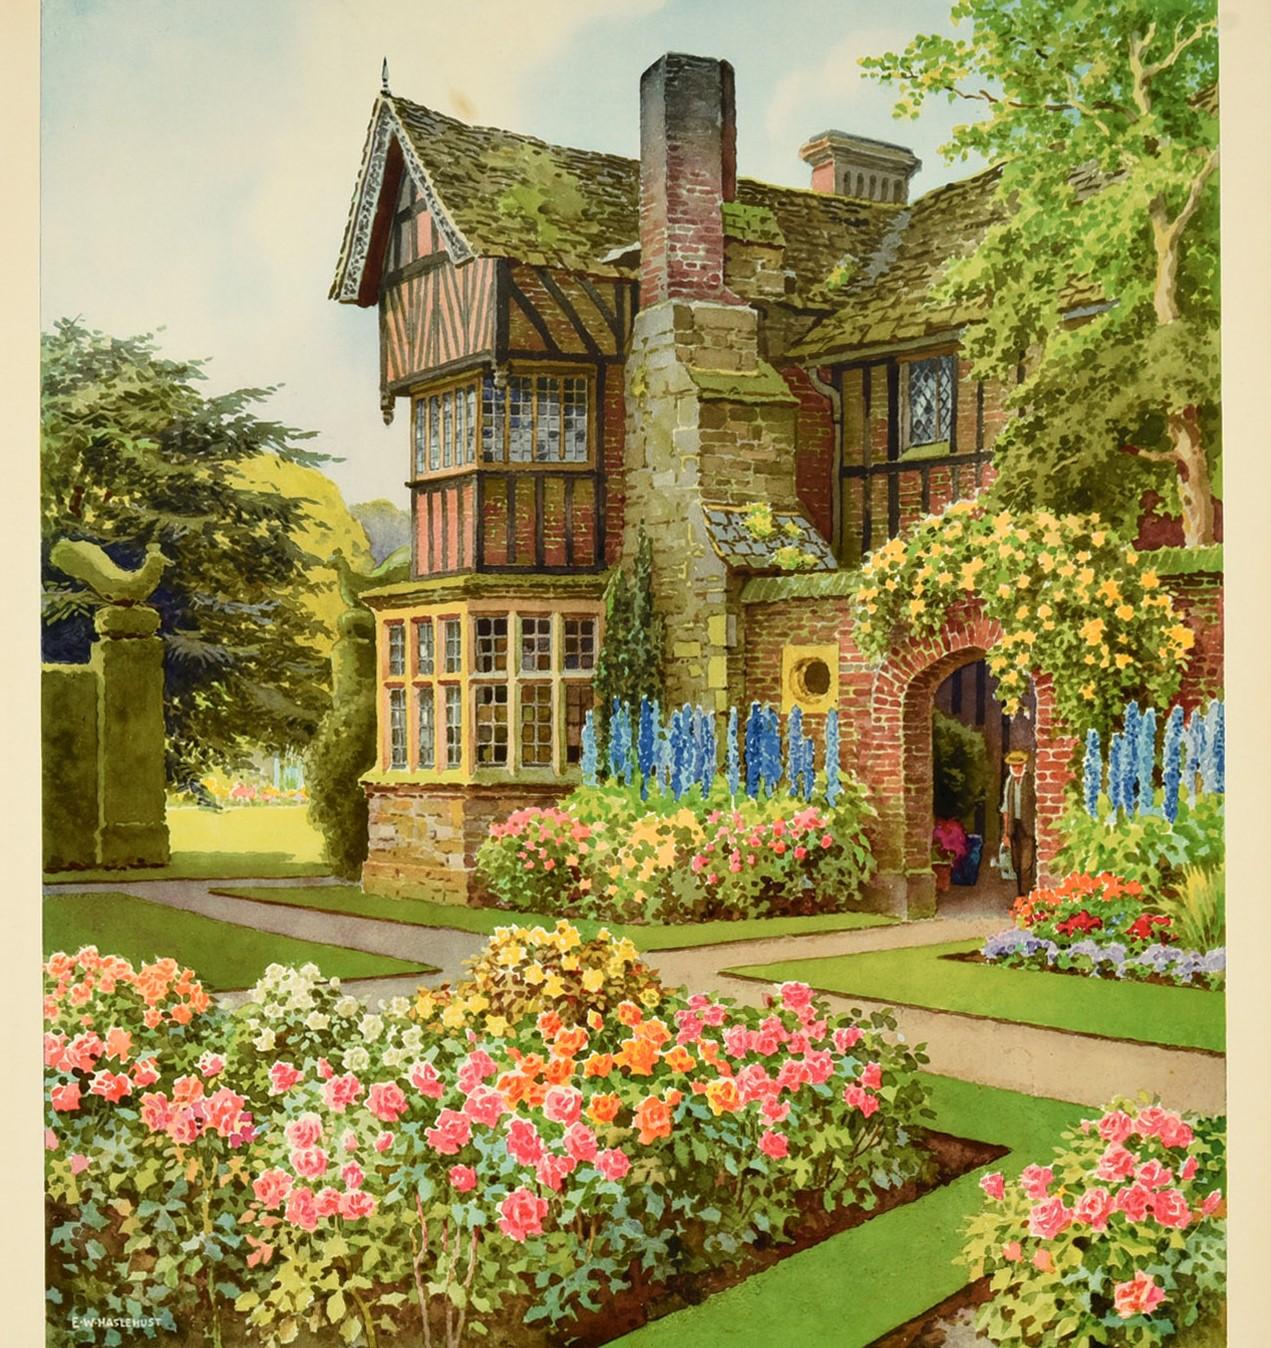 Original Vintage Poster Britain In Summer Travel Country House Landscape Gardens - Print by Ernest W. Haslehust